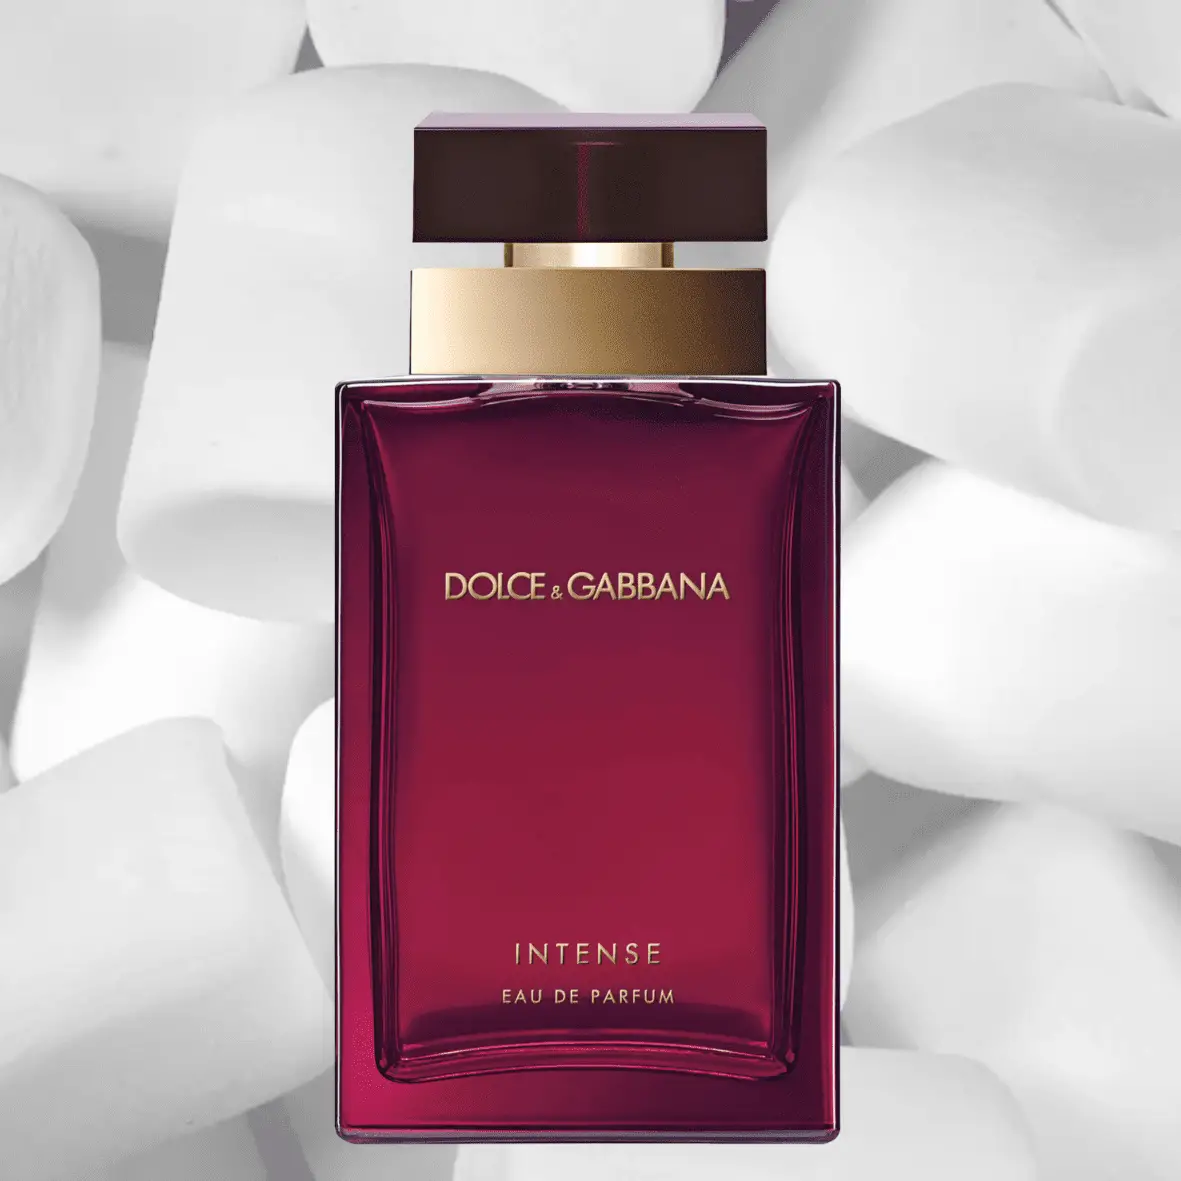 Dolce & Gabbana Pour Femme
Best Marshmallow Perfumes